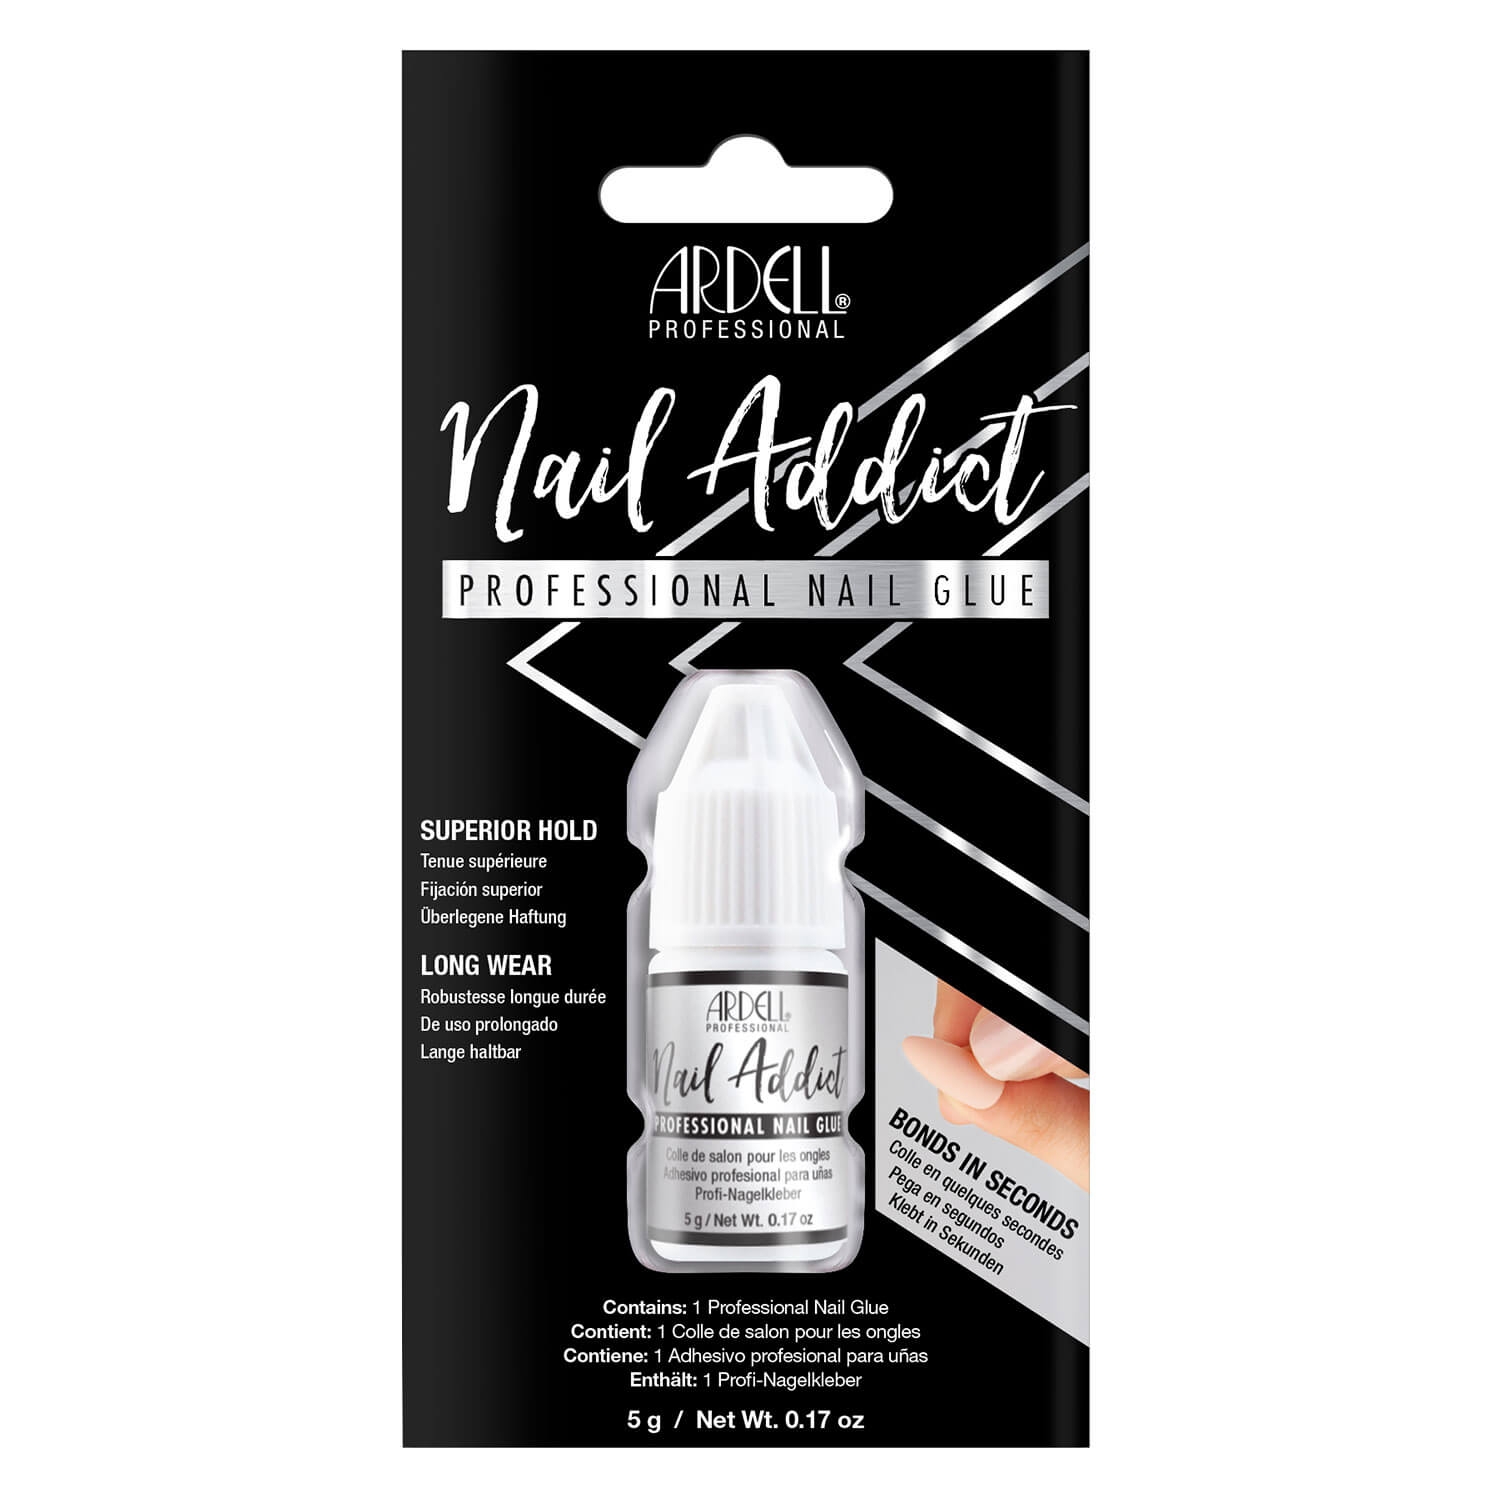 Product image from Nail Addict - Nail Addict Professional Nail Glue